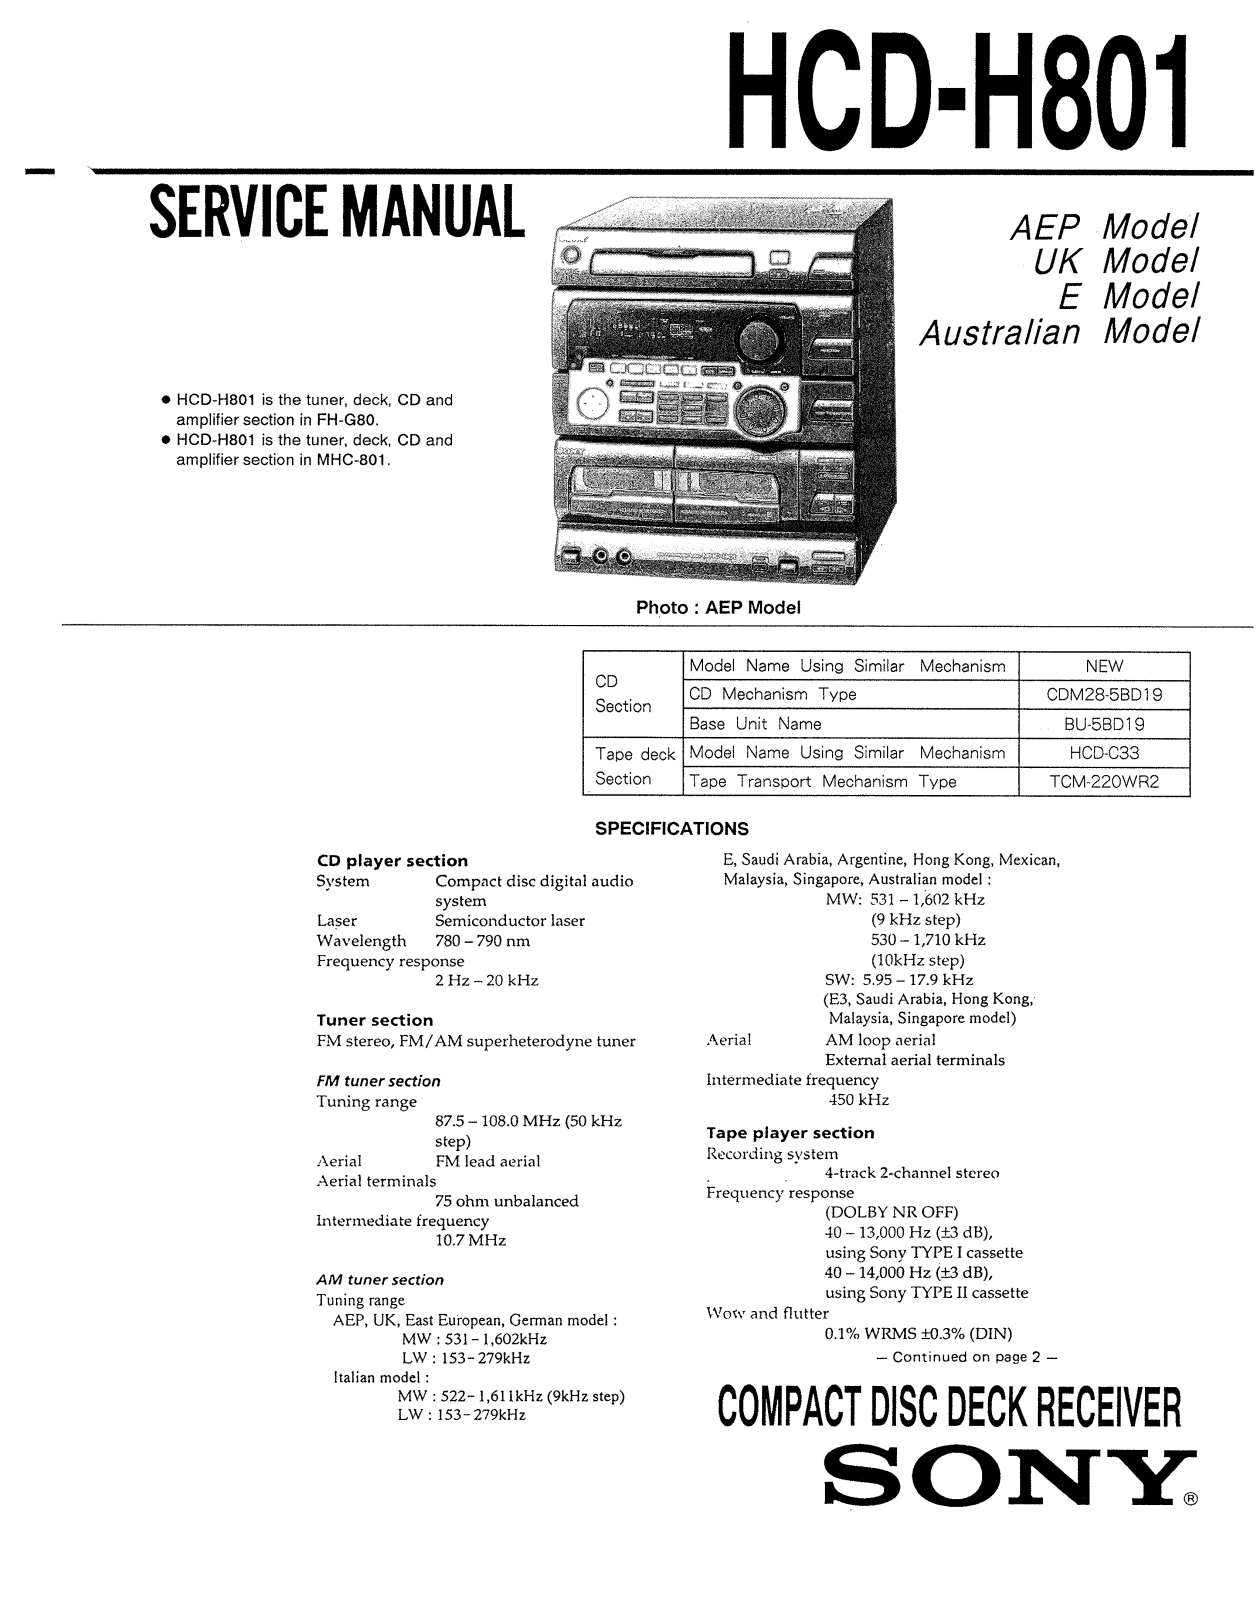 SONY HCD H801 Service Manual